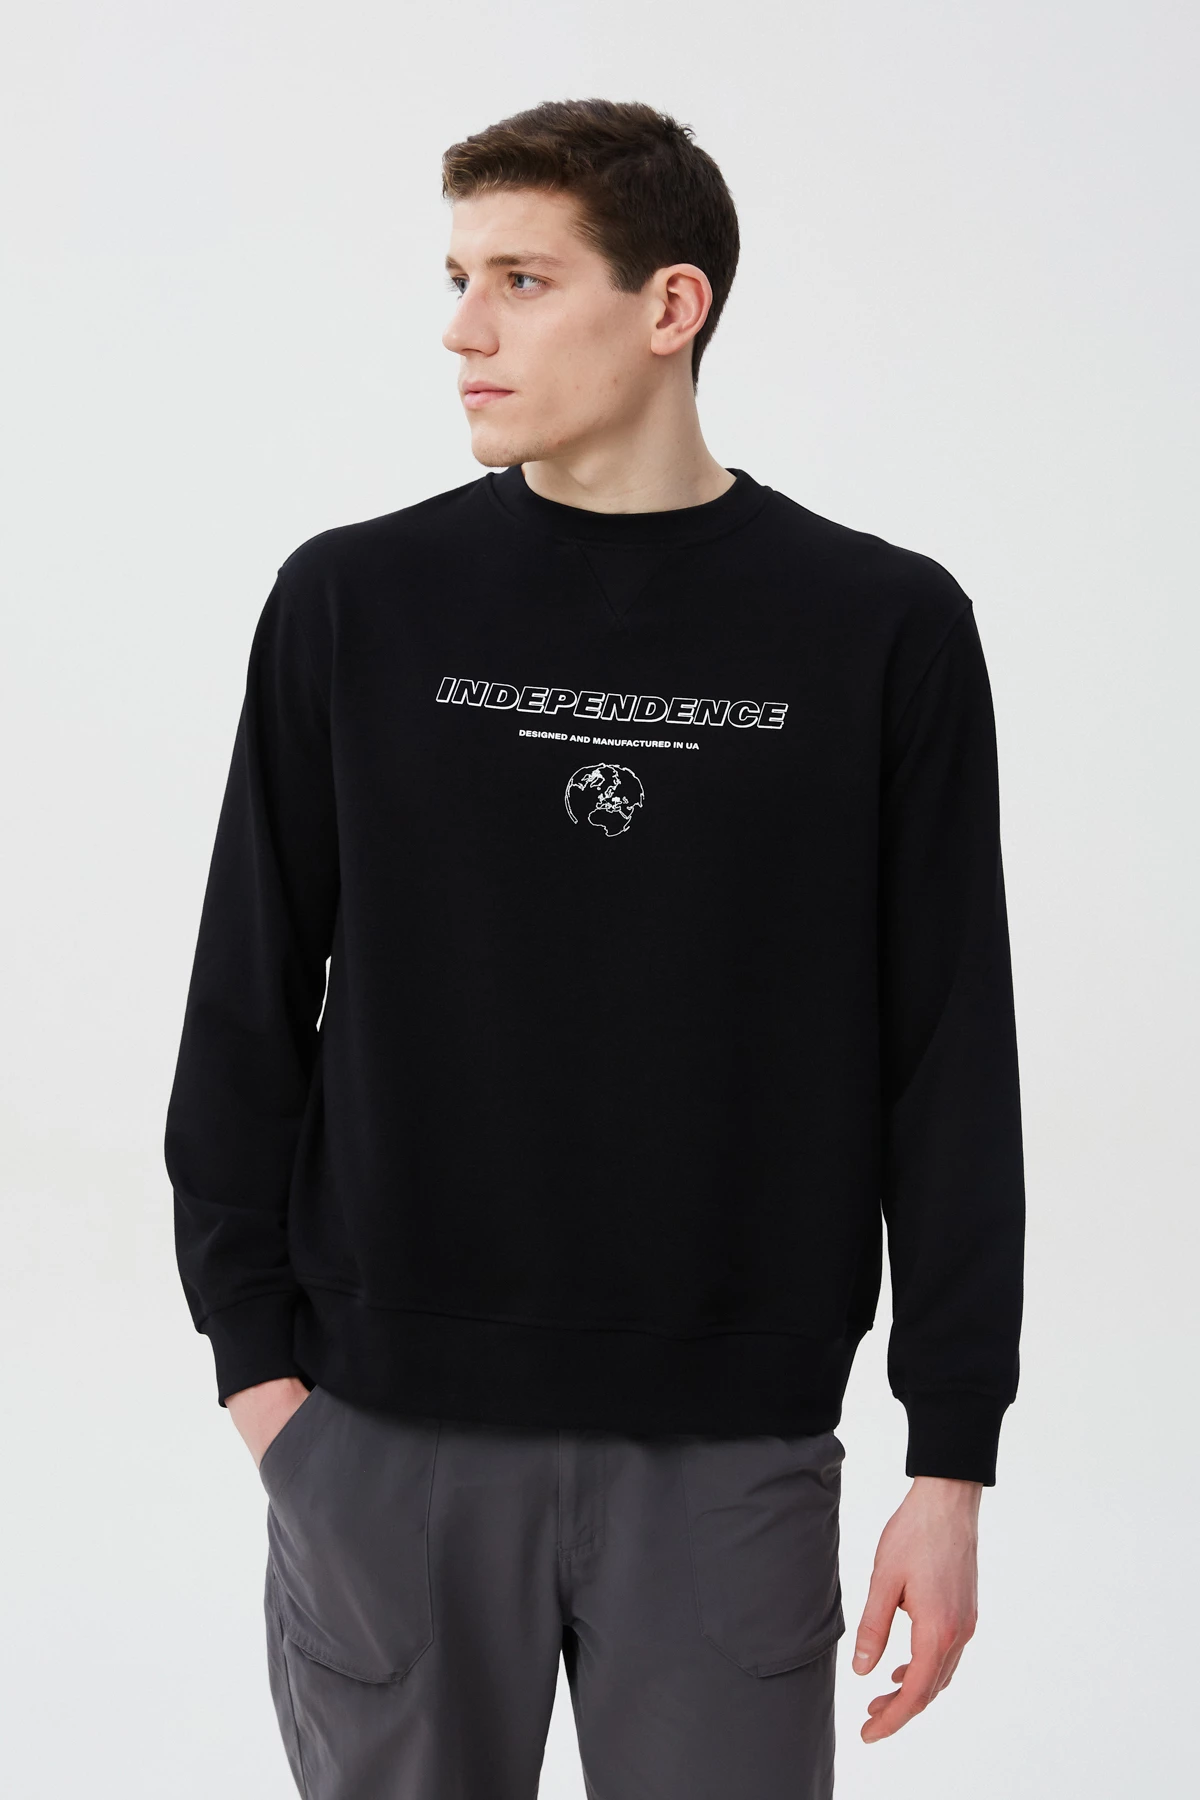 Black unisex sweatshirt with "Independence" print, photo 5